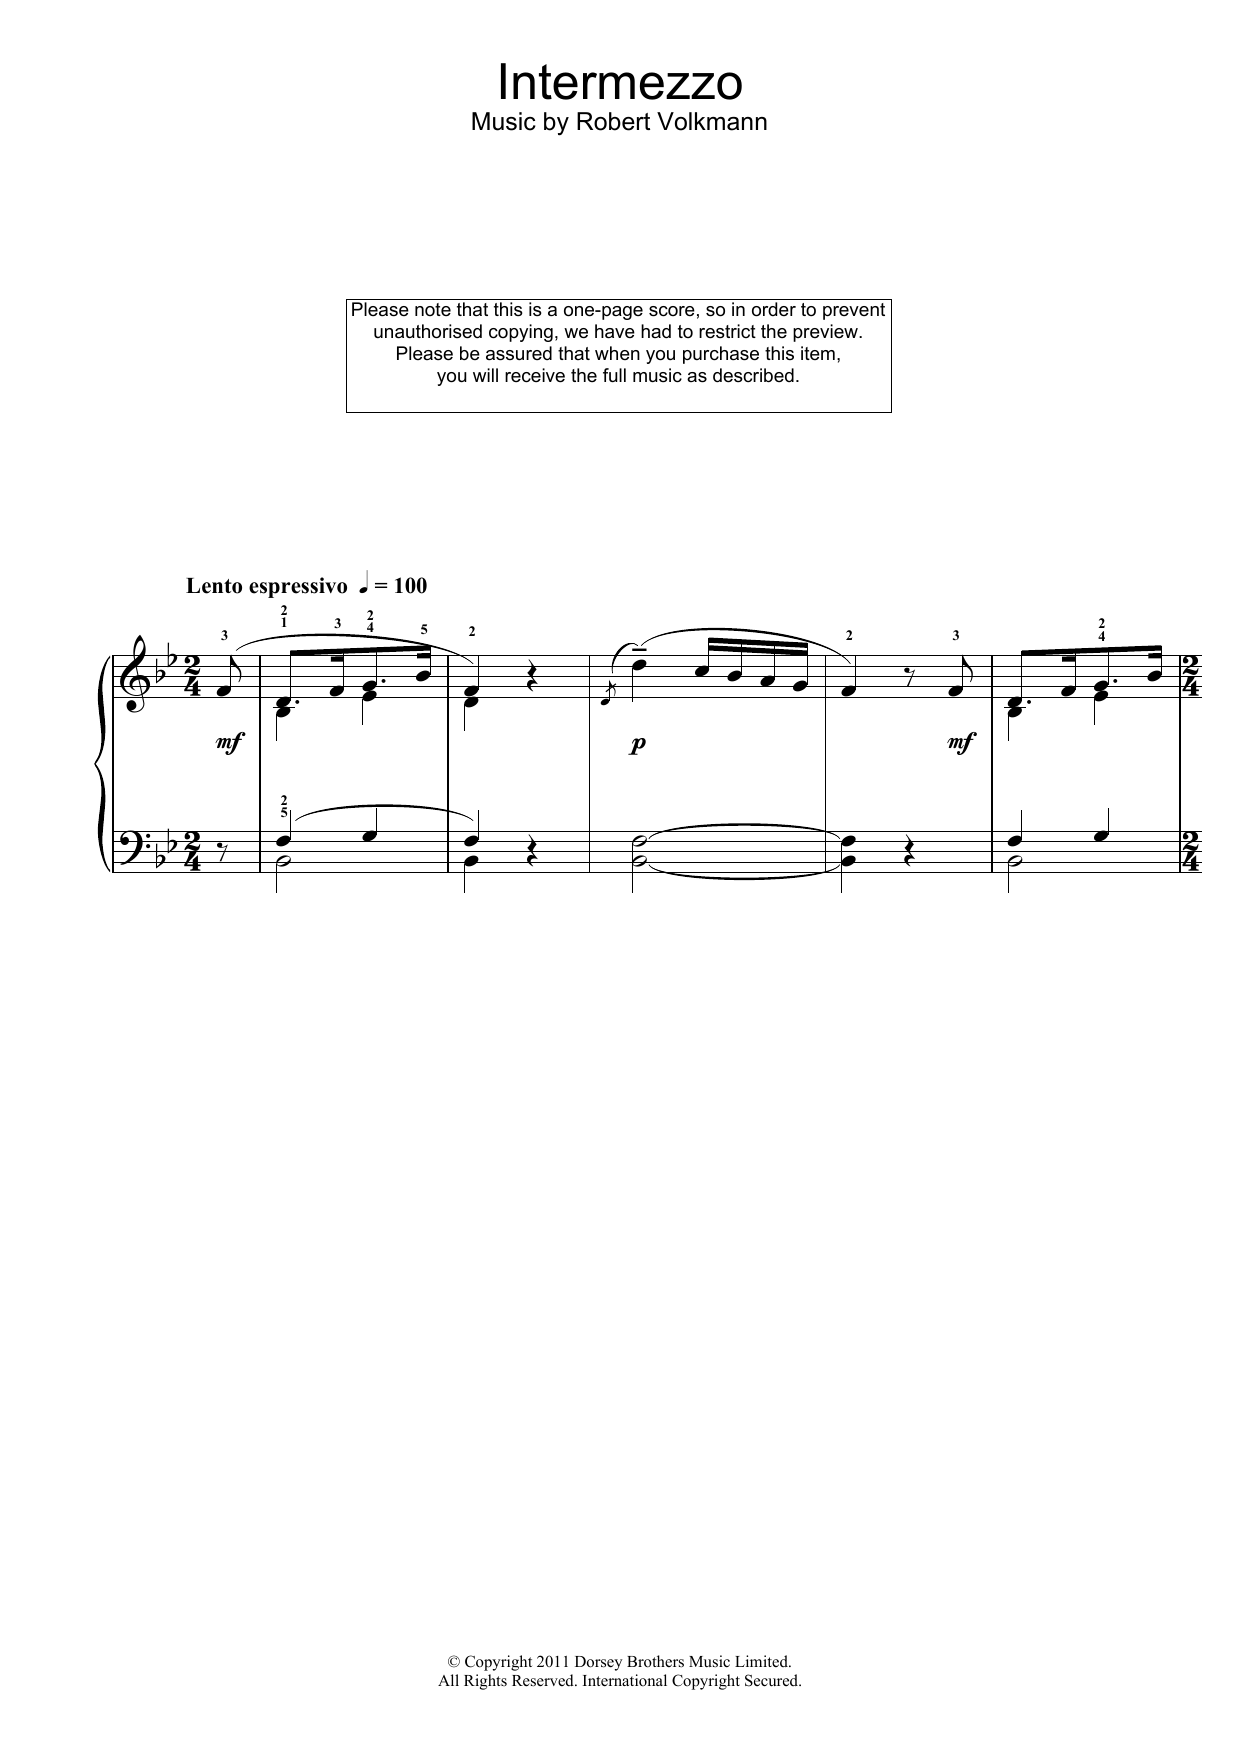 Robert Volkmann Intermezzo Sheet Music Notes & Chords for Piano - Download or Print PDF